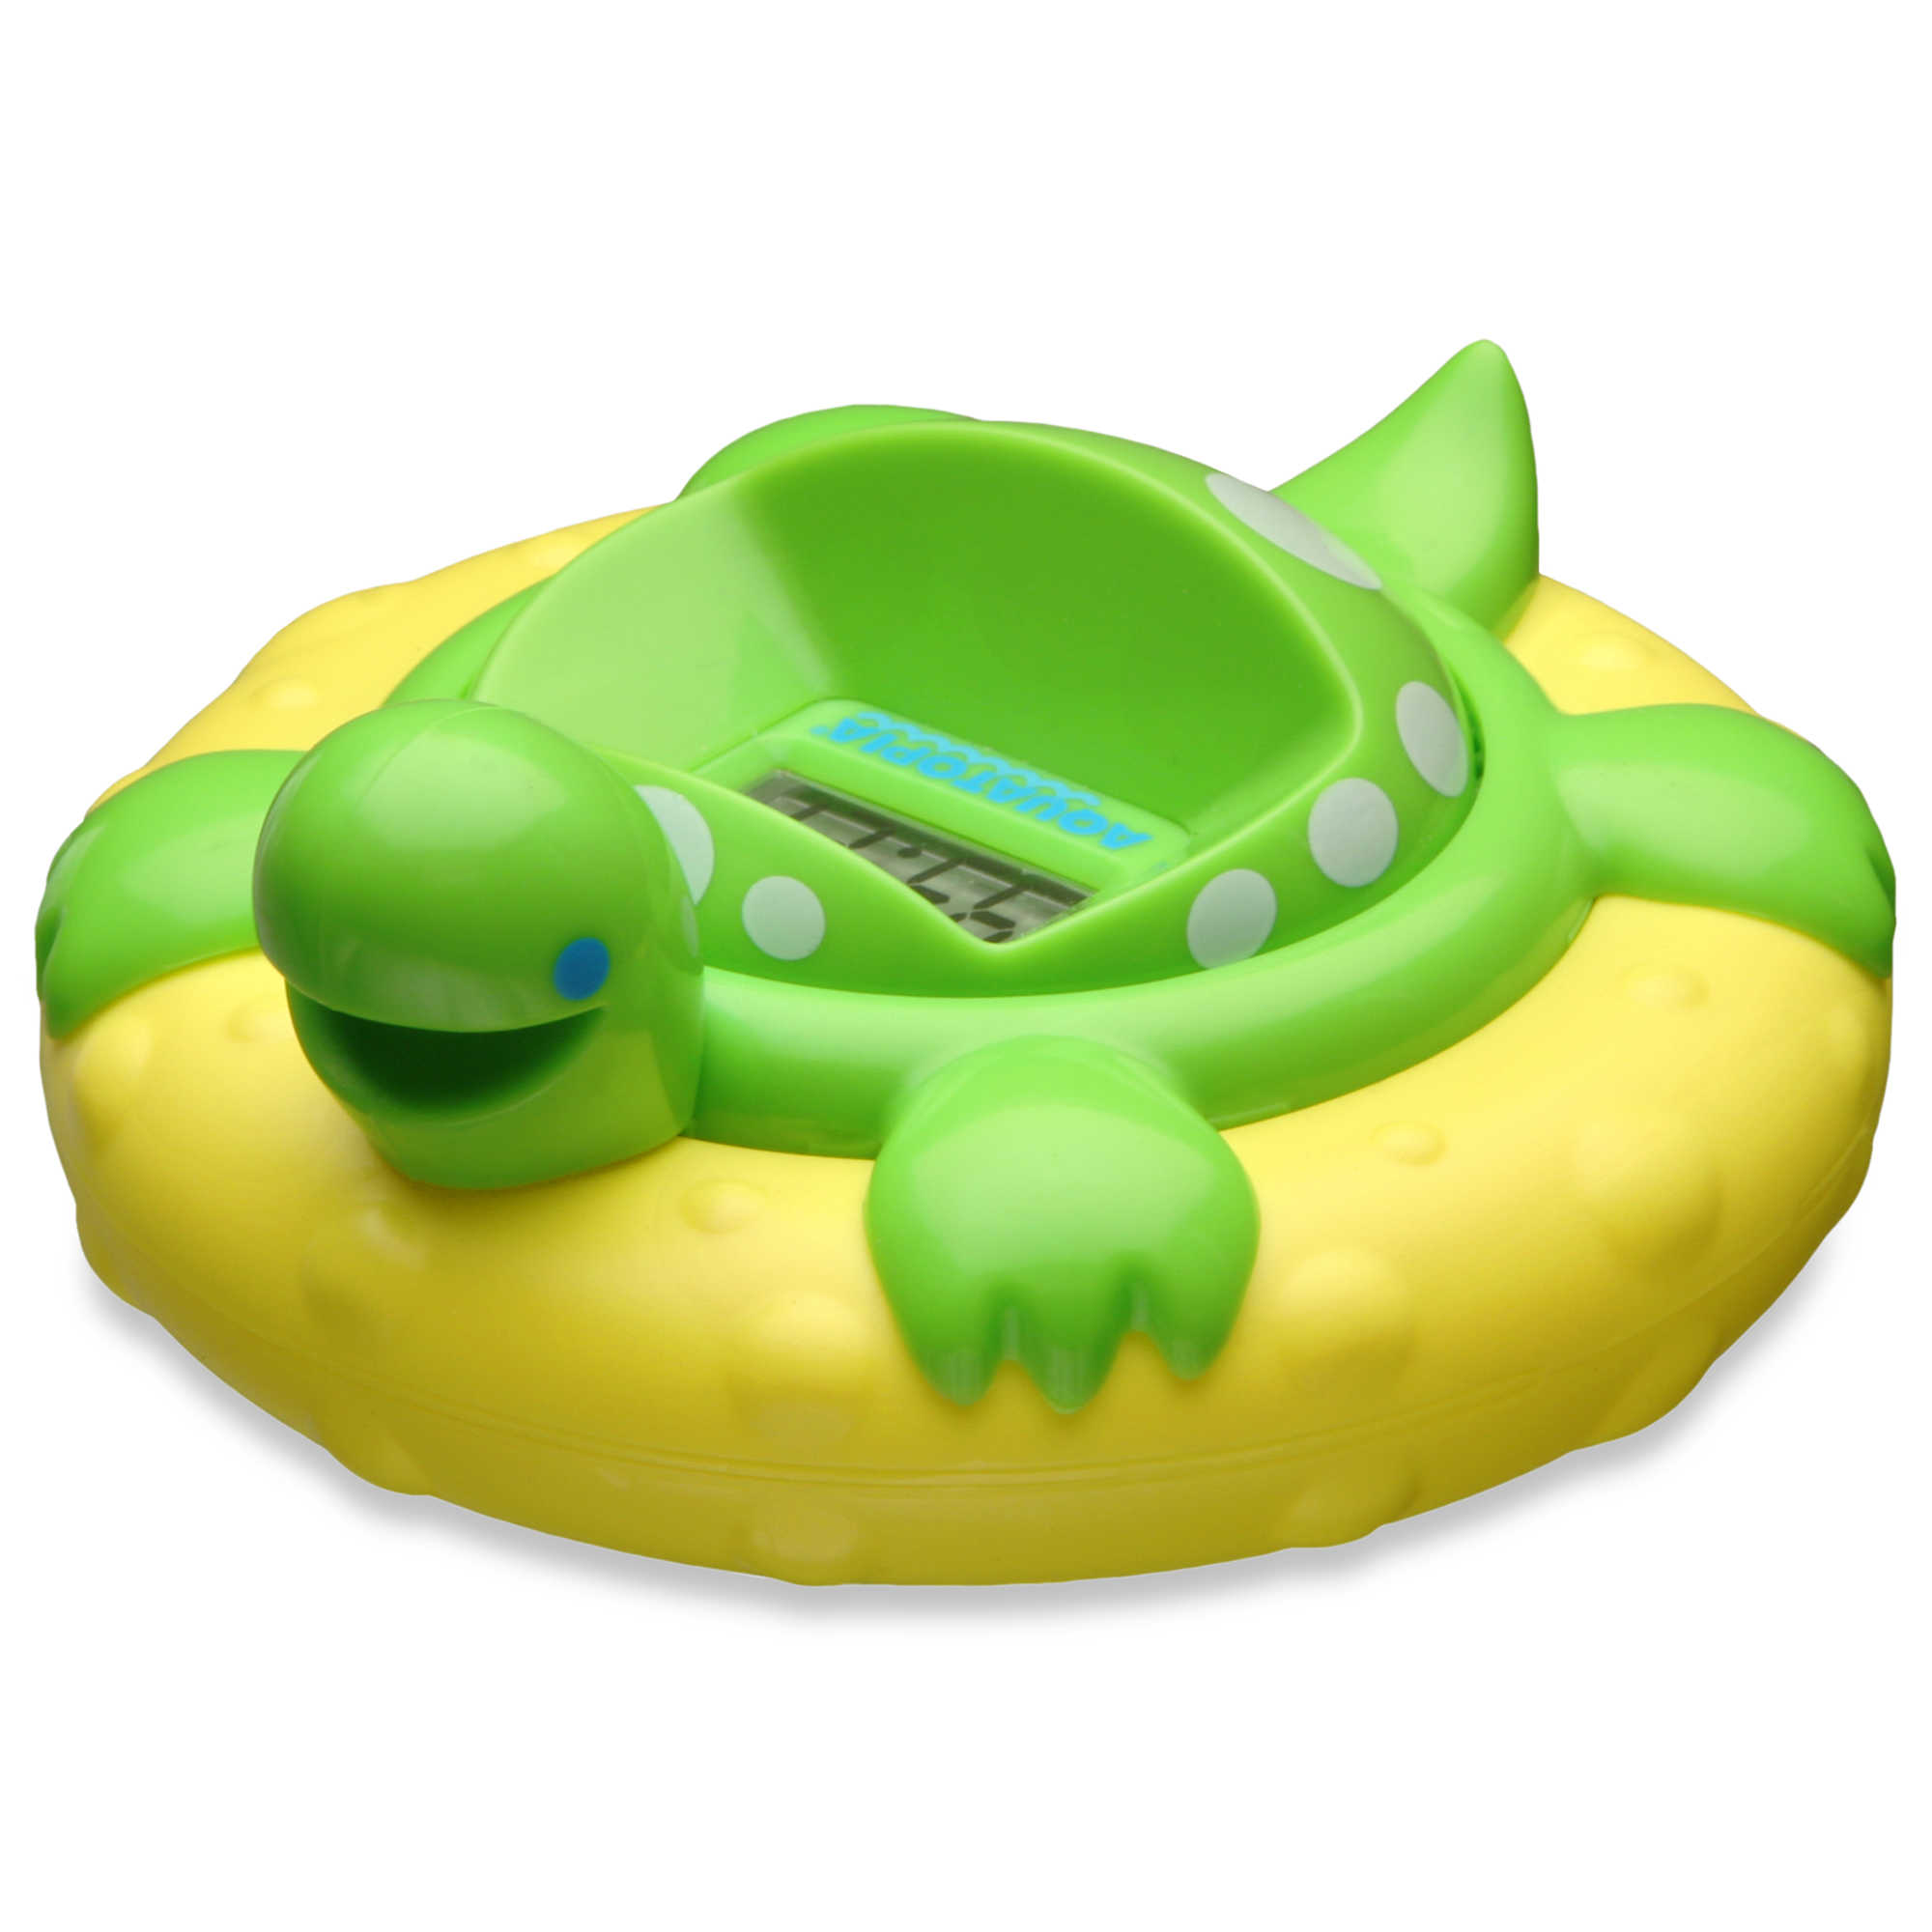 Aquatopia Bath Thermometer, Digital Audible Alarm, Green - image 1 of 6